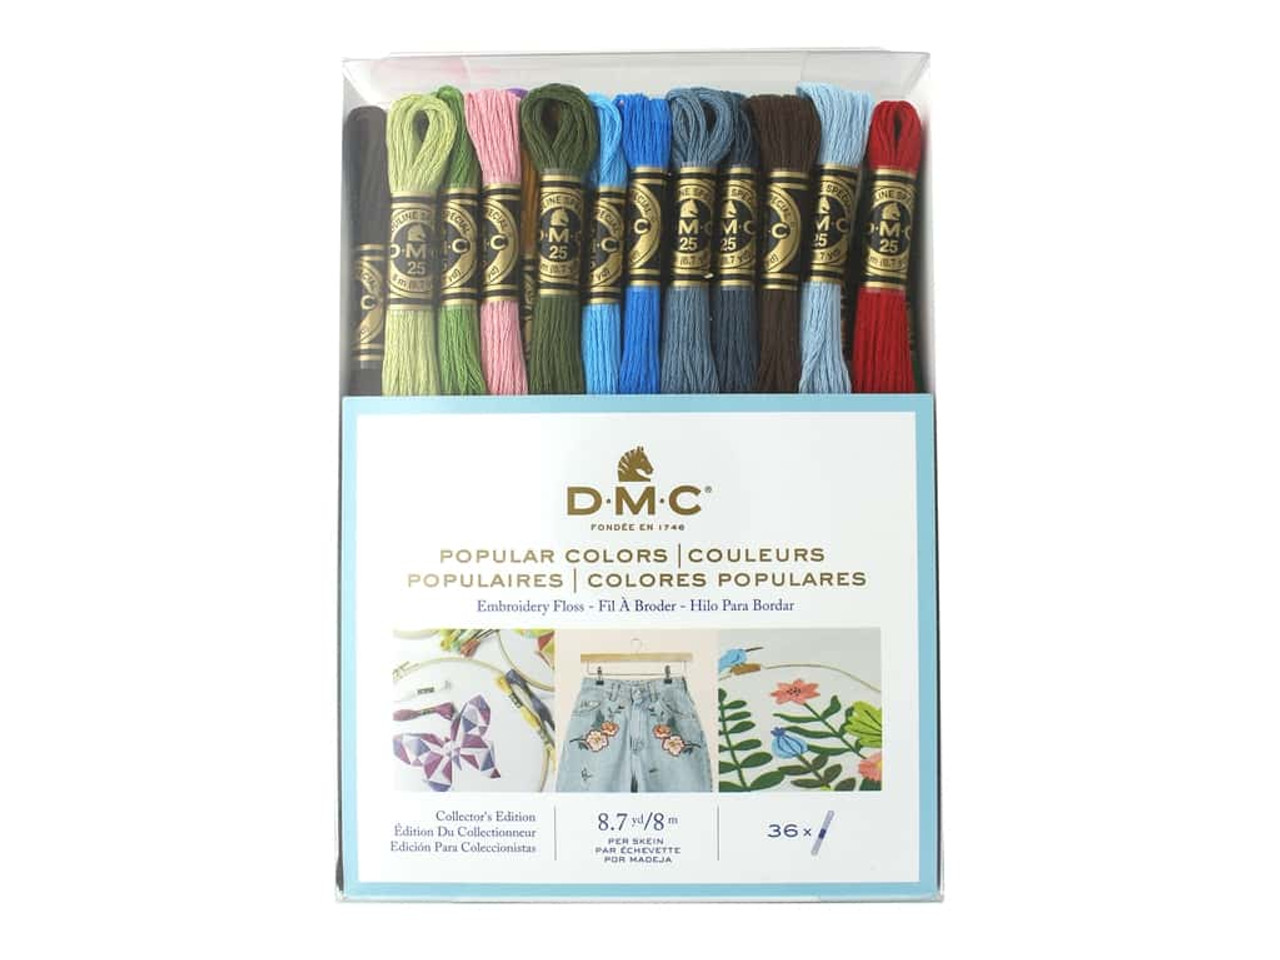 The Popular Colors - DMC